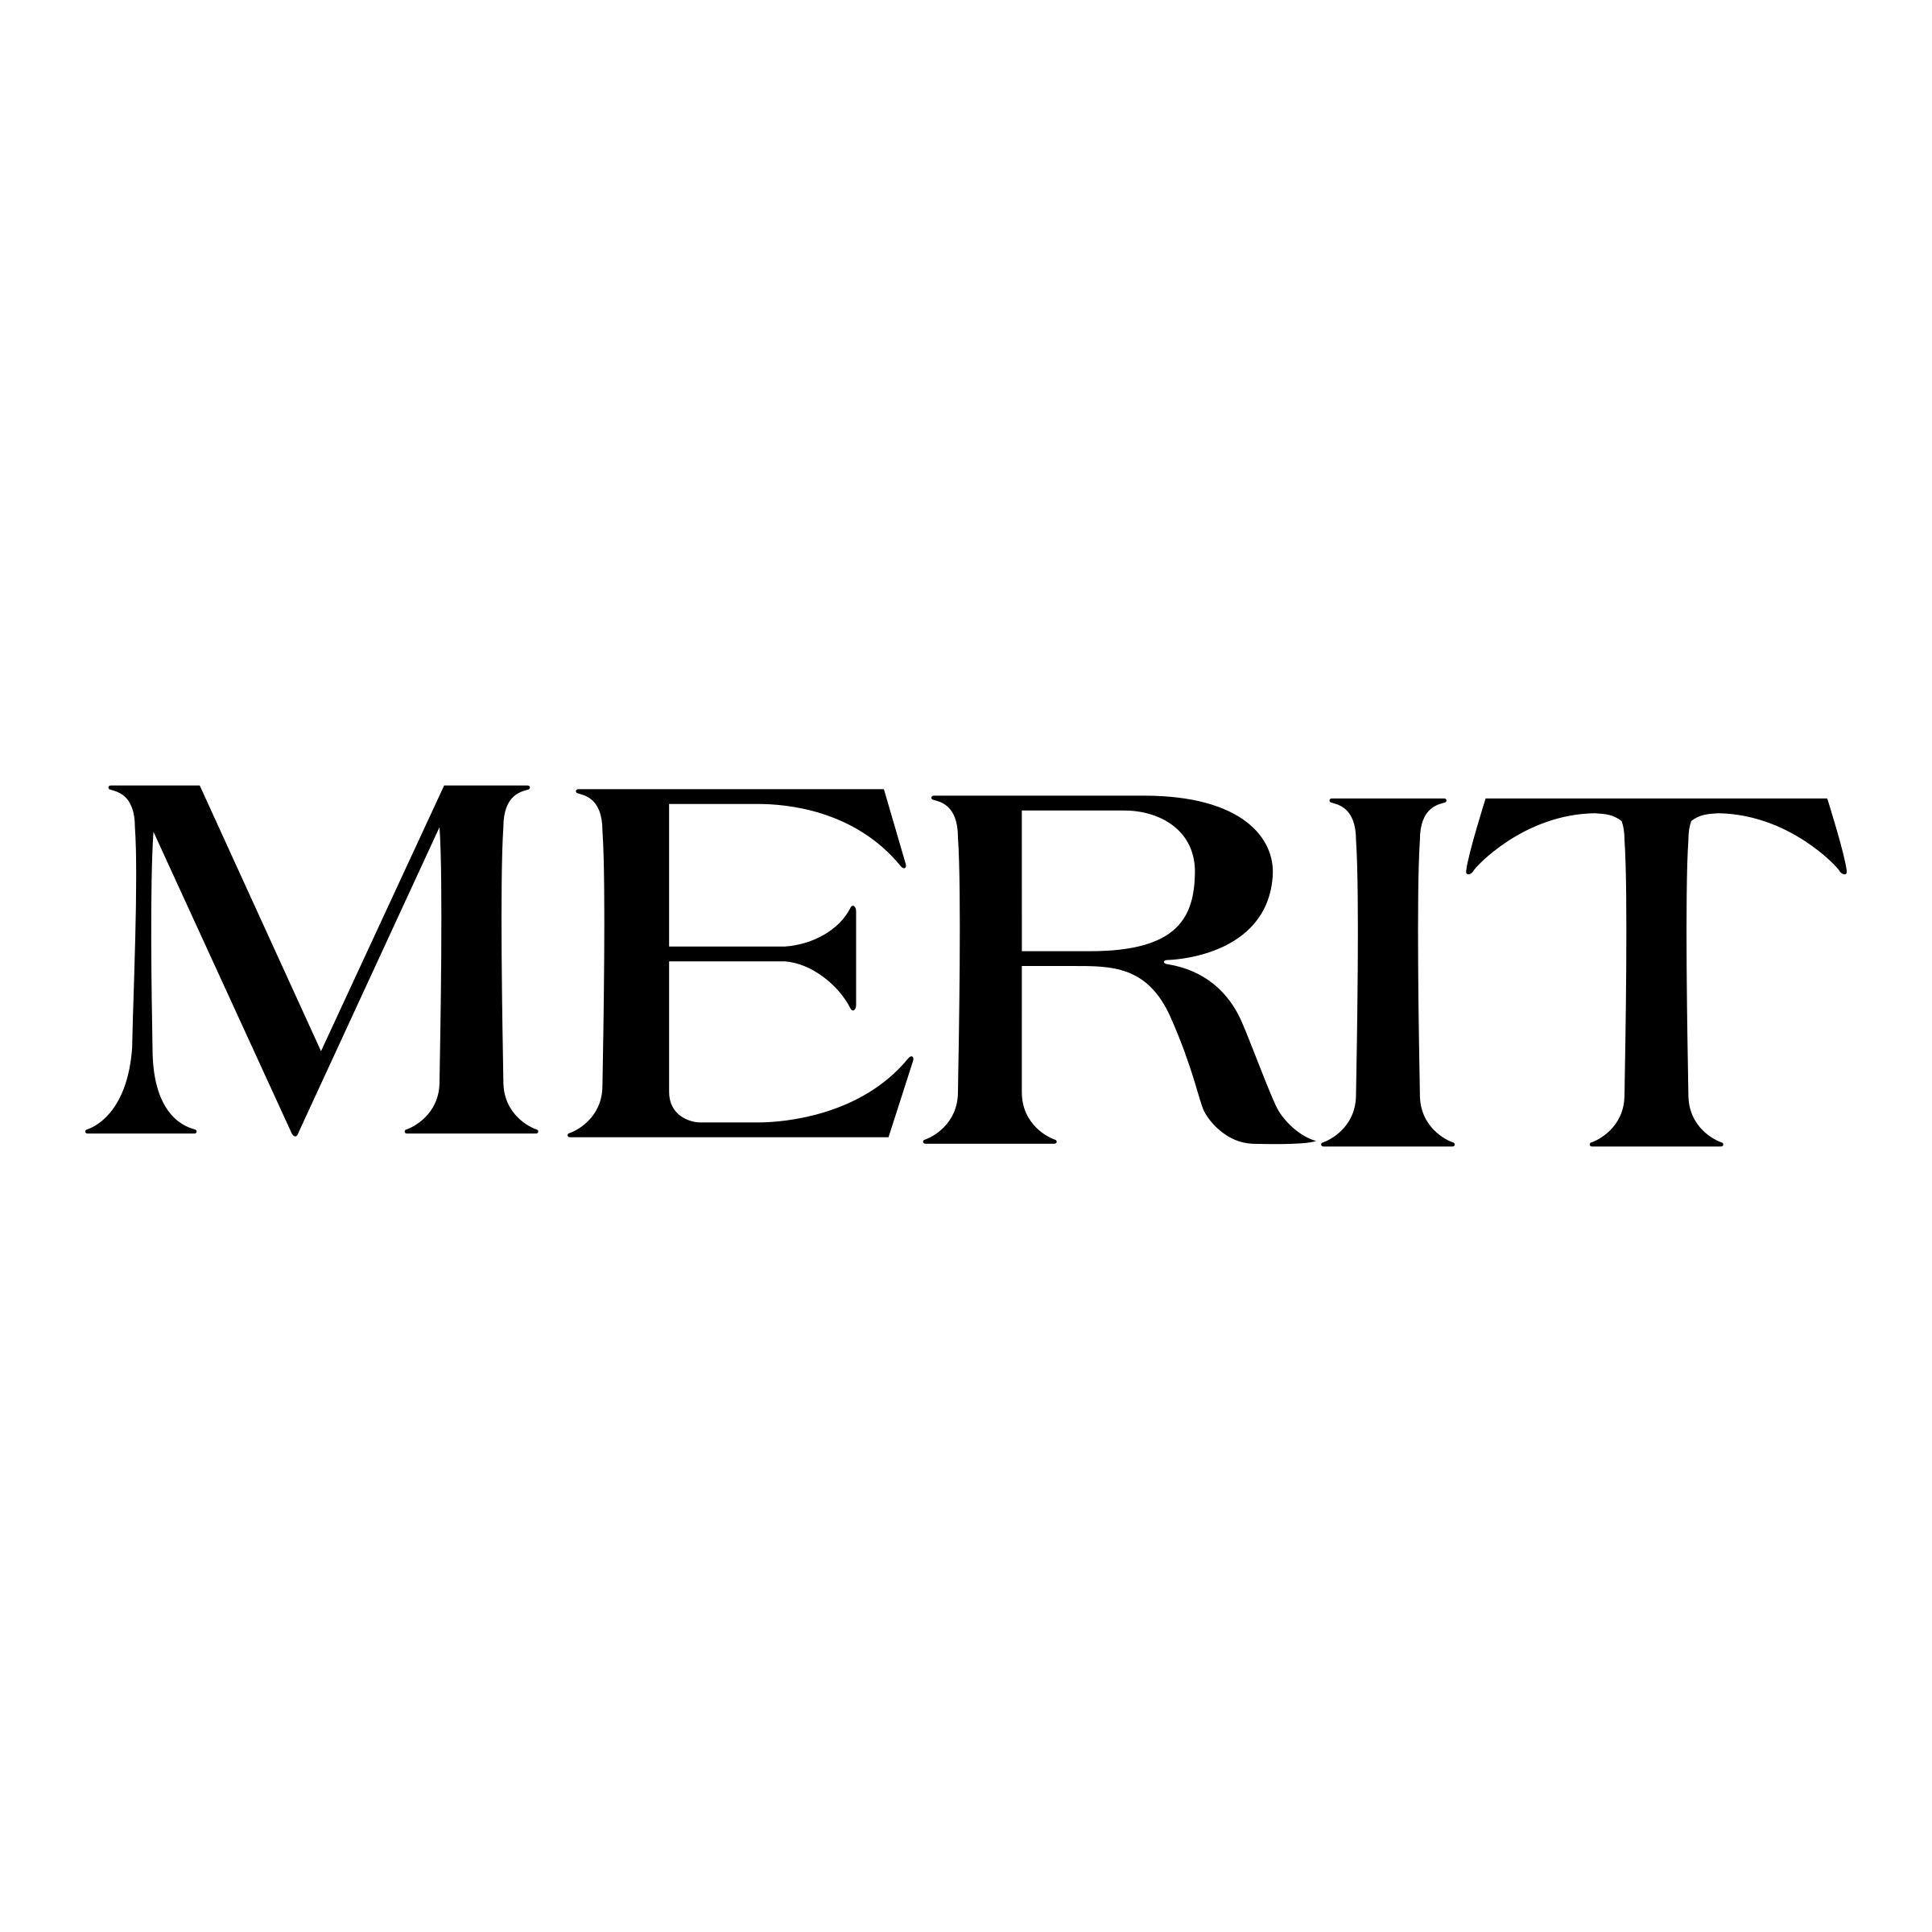 Merit Logo - Merit Logo PNG Transparent & SVG Vector